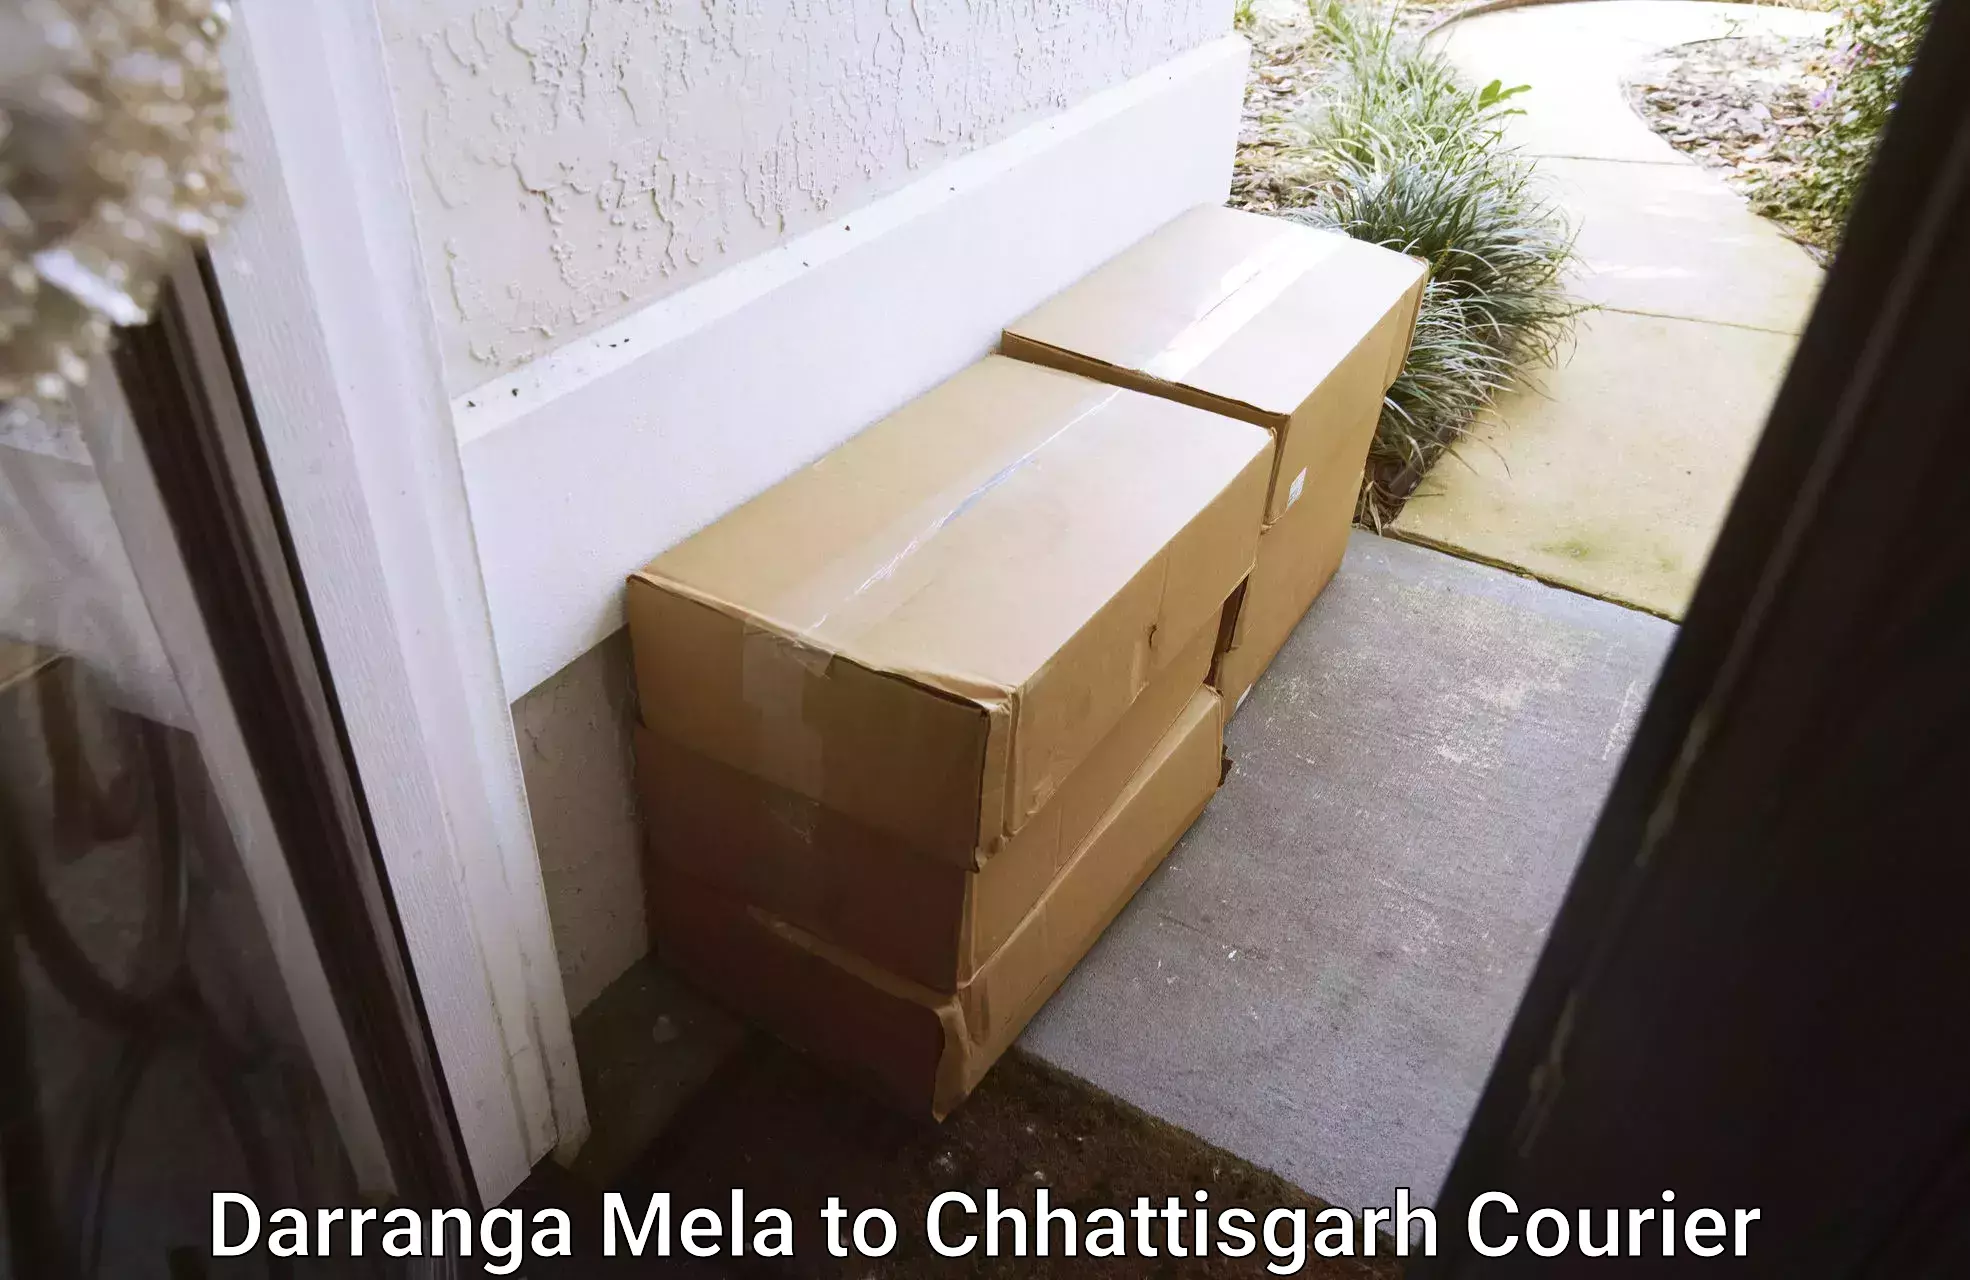 Seamless shipping experience Darranga Mela to Patna Chhattisgarh